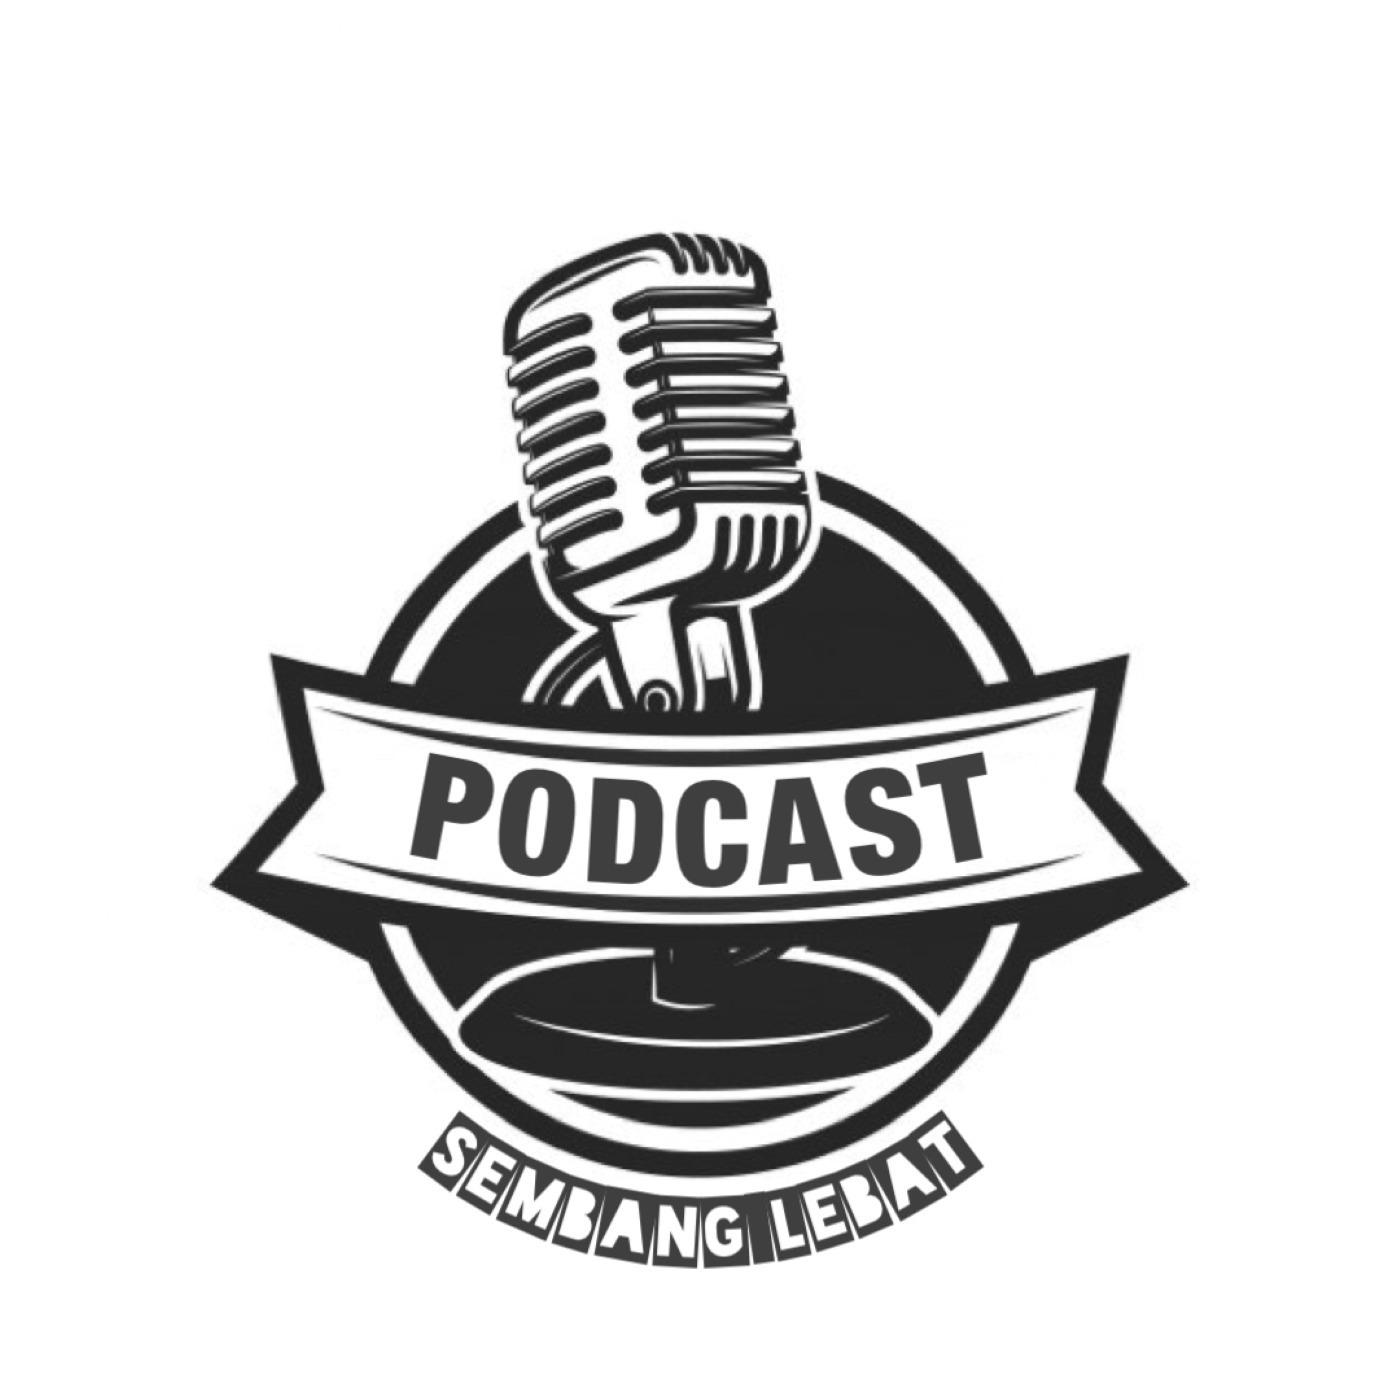 Bajet Bajet Podcast Sembang Lebat